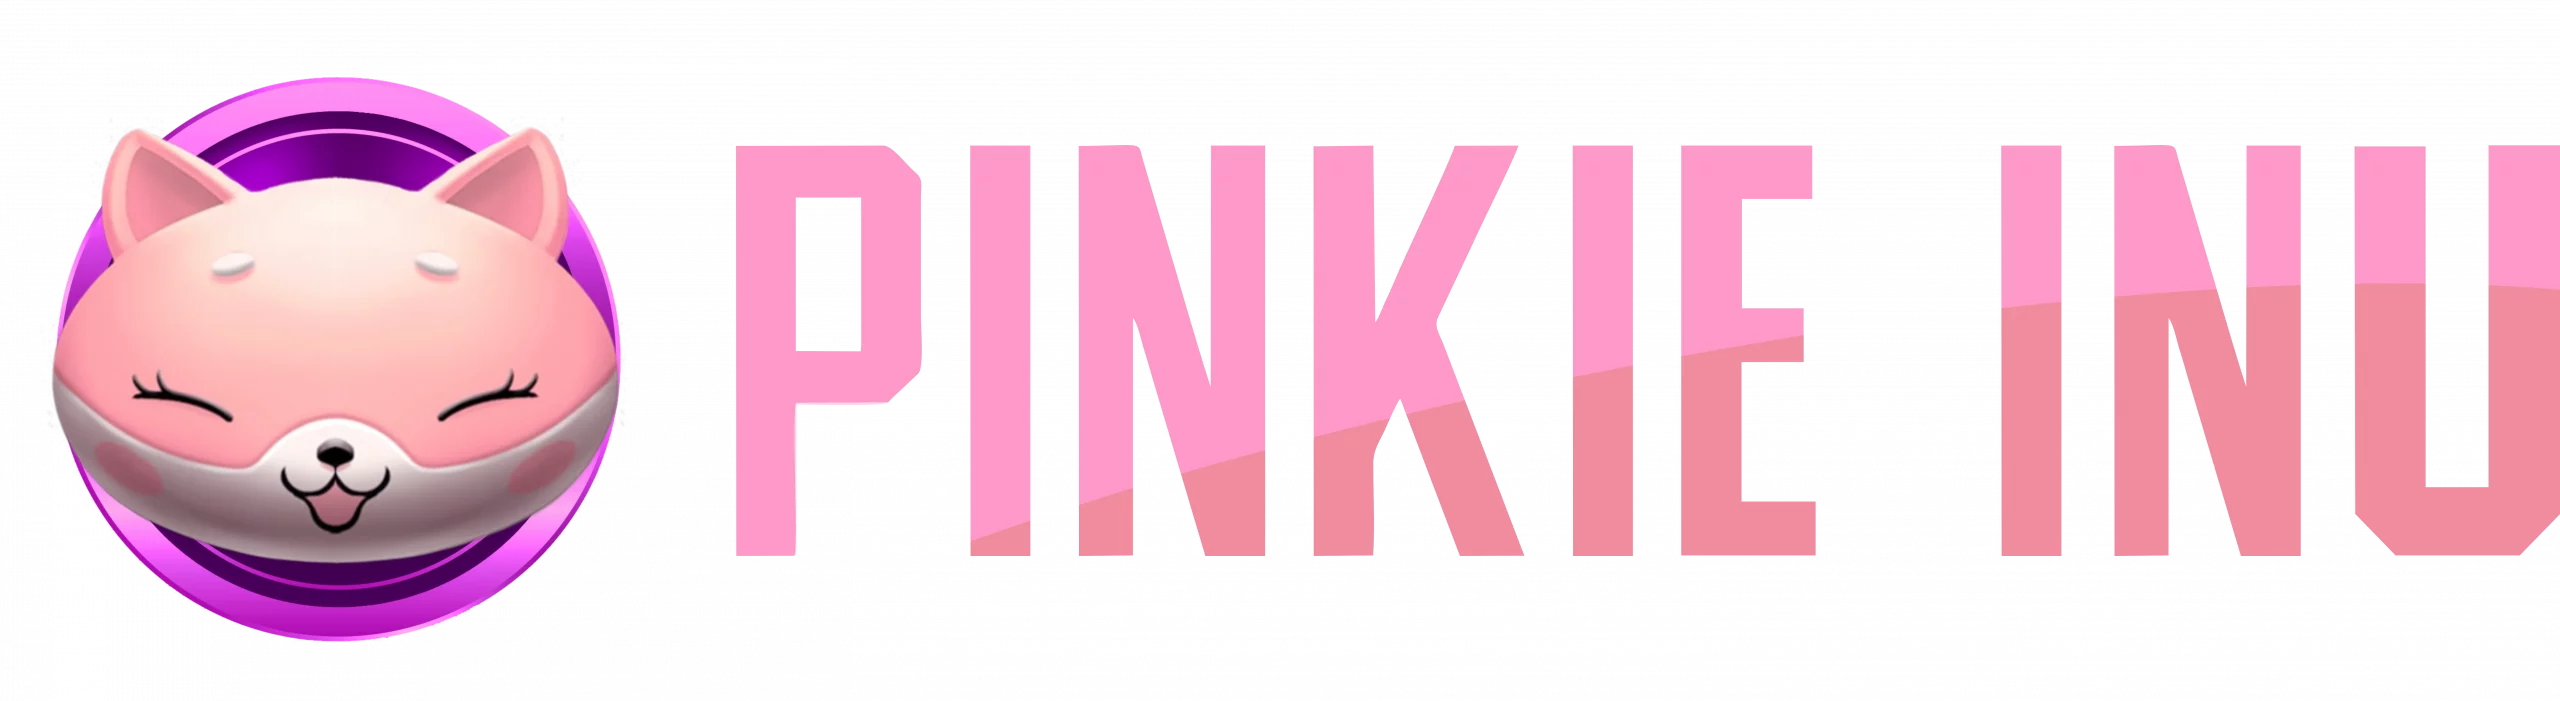 pninkie_logo.png